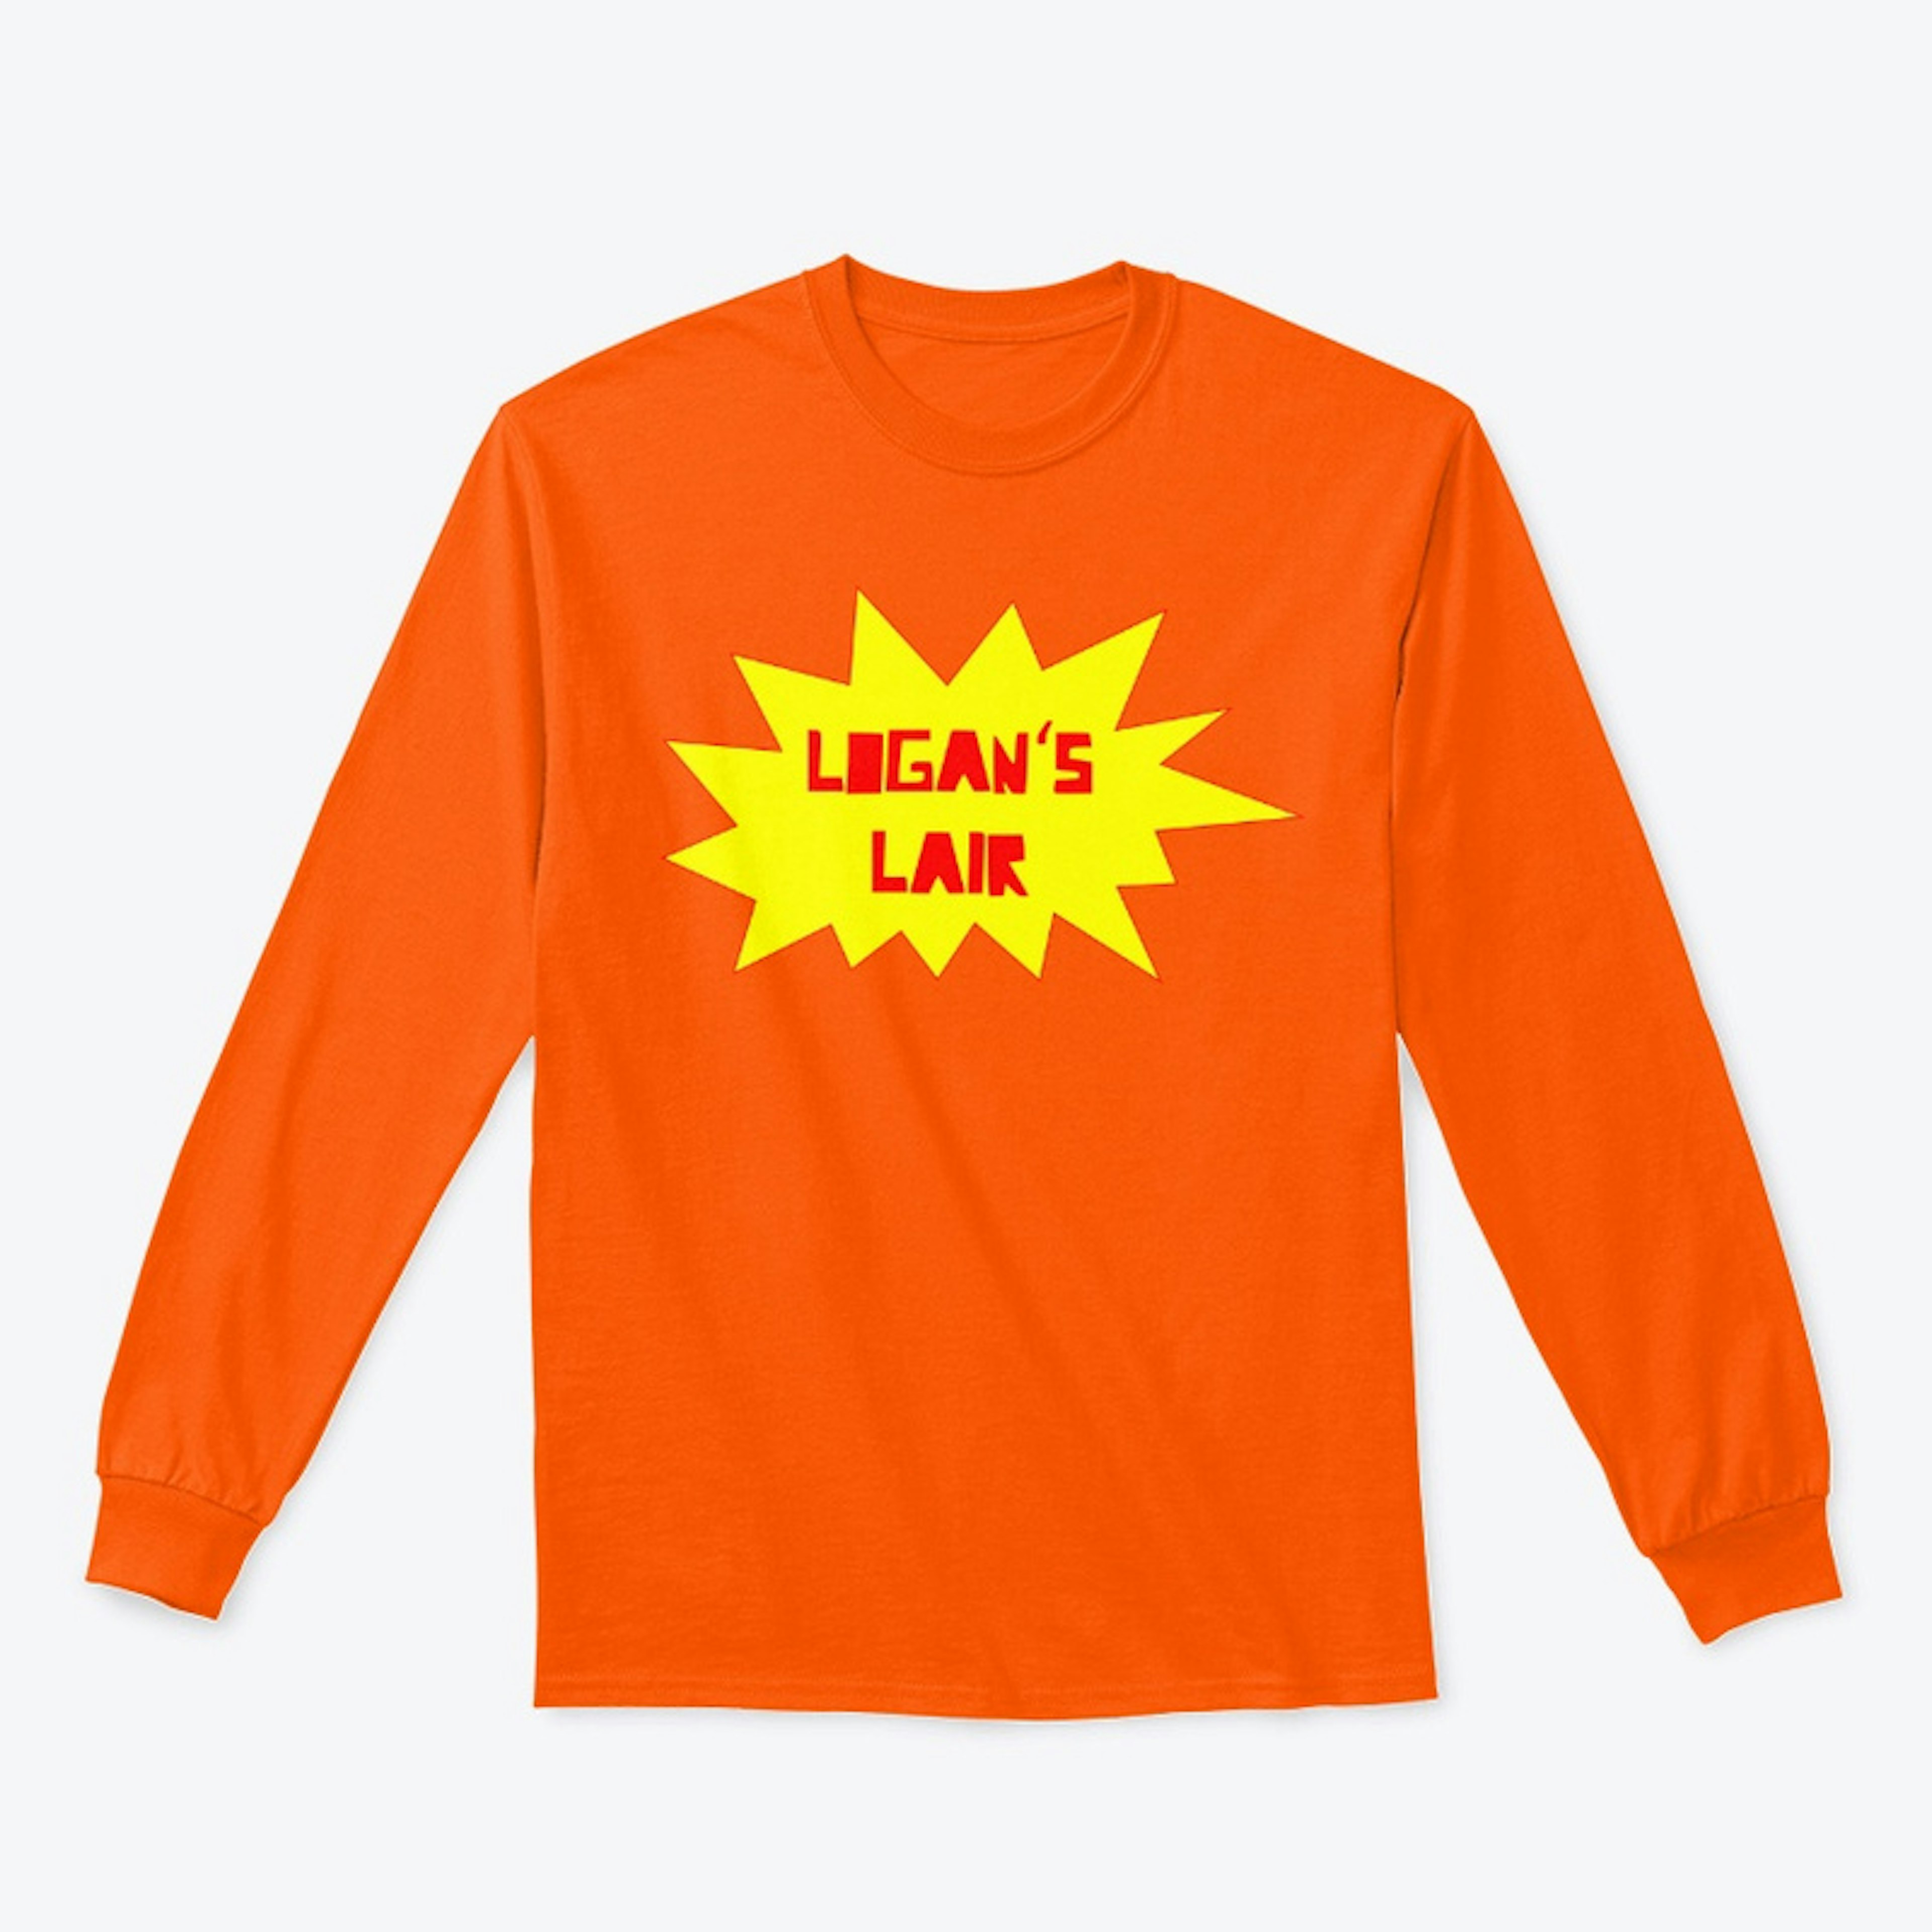 Logan's Lair Long Sleeve Tee